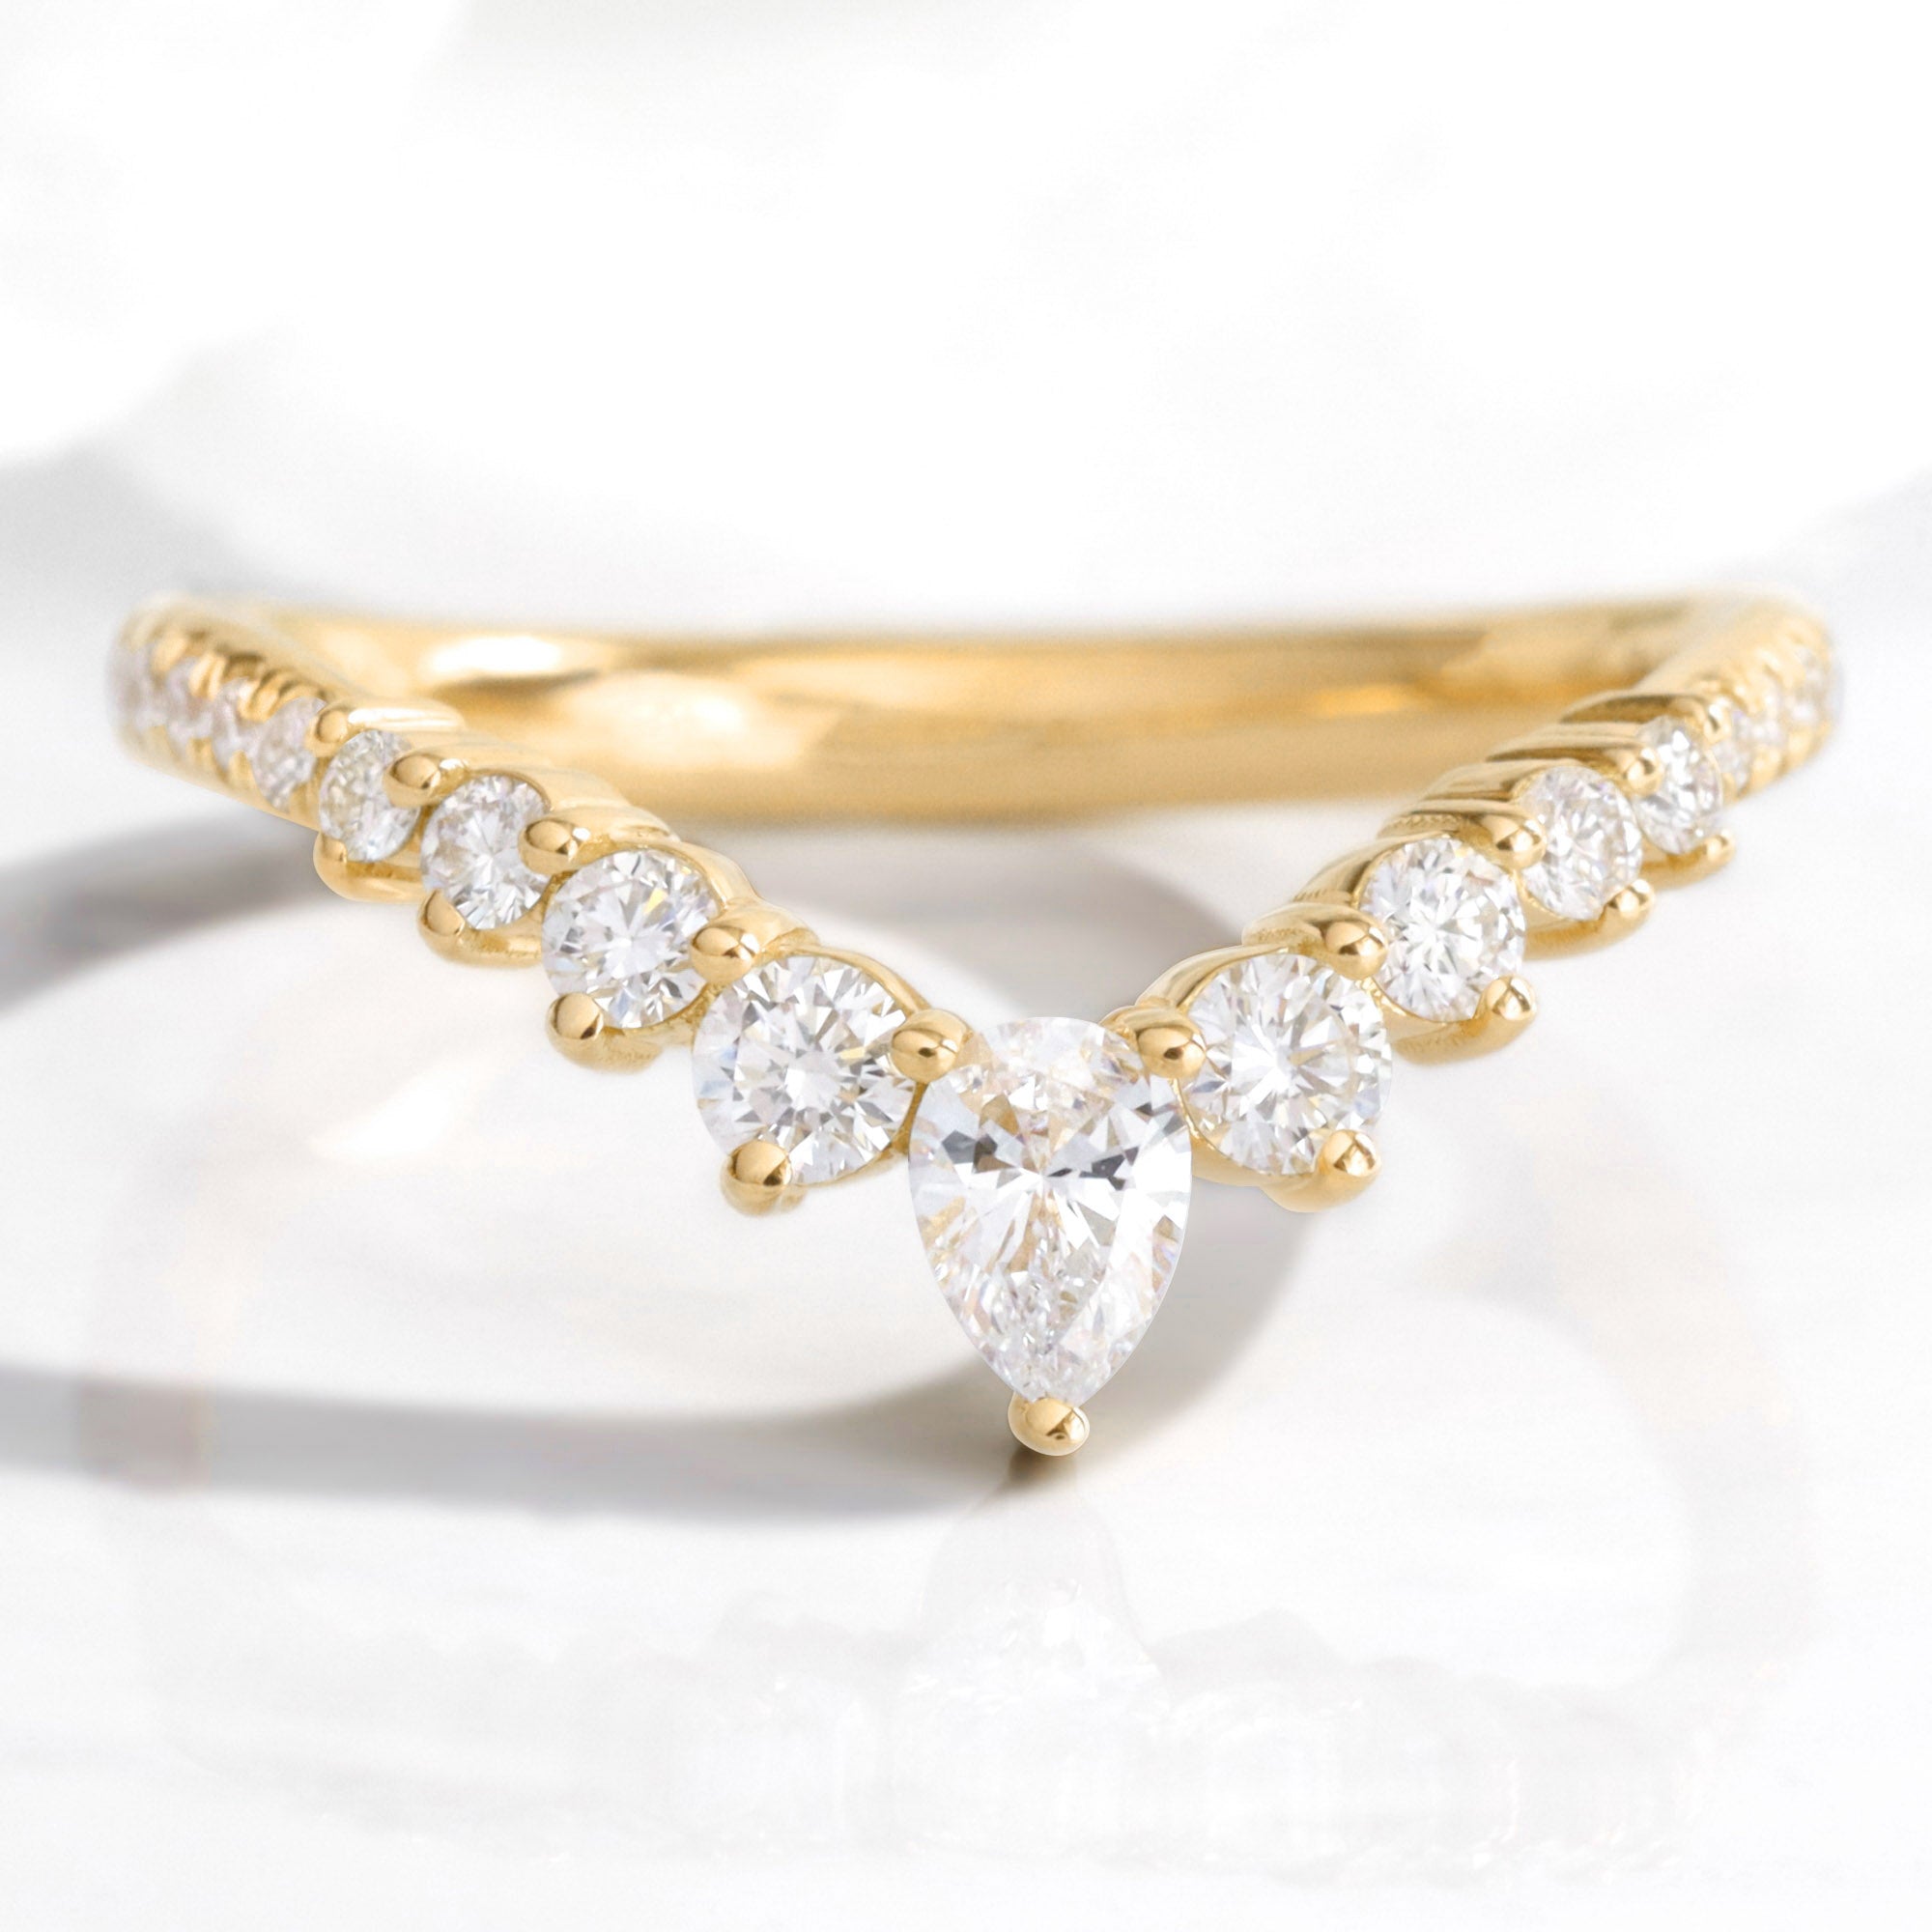 Wishbone diamond wedding ring yellow gold V shaped curved pave wedding band la more design jewelry